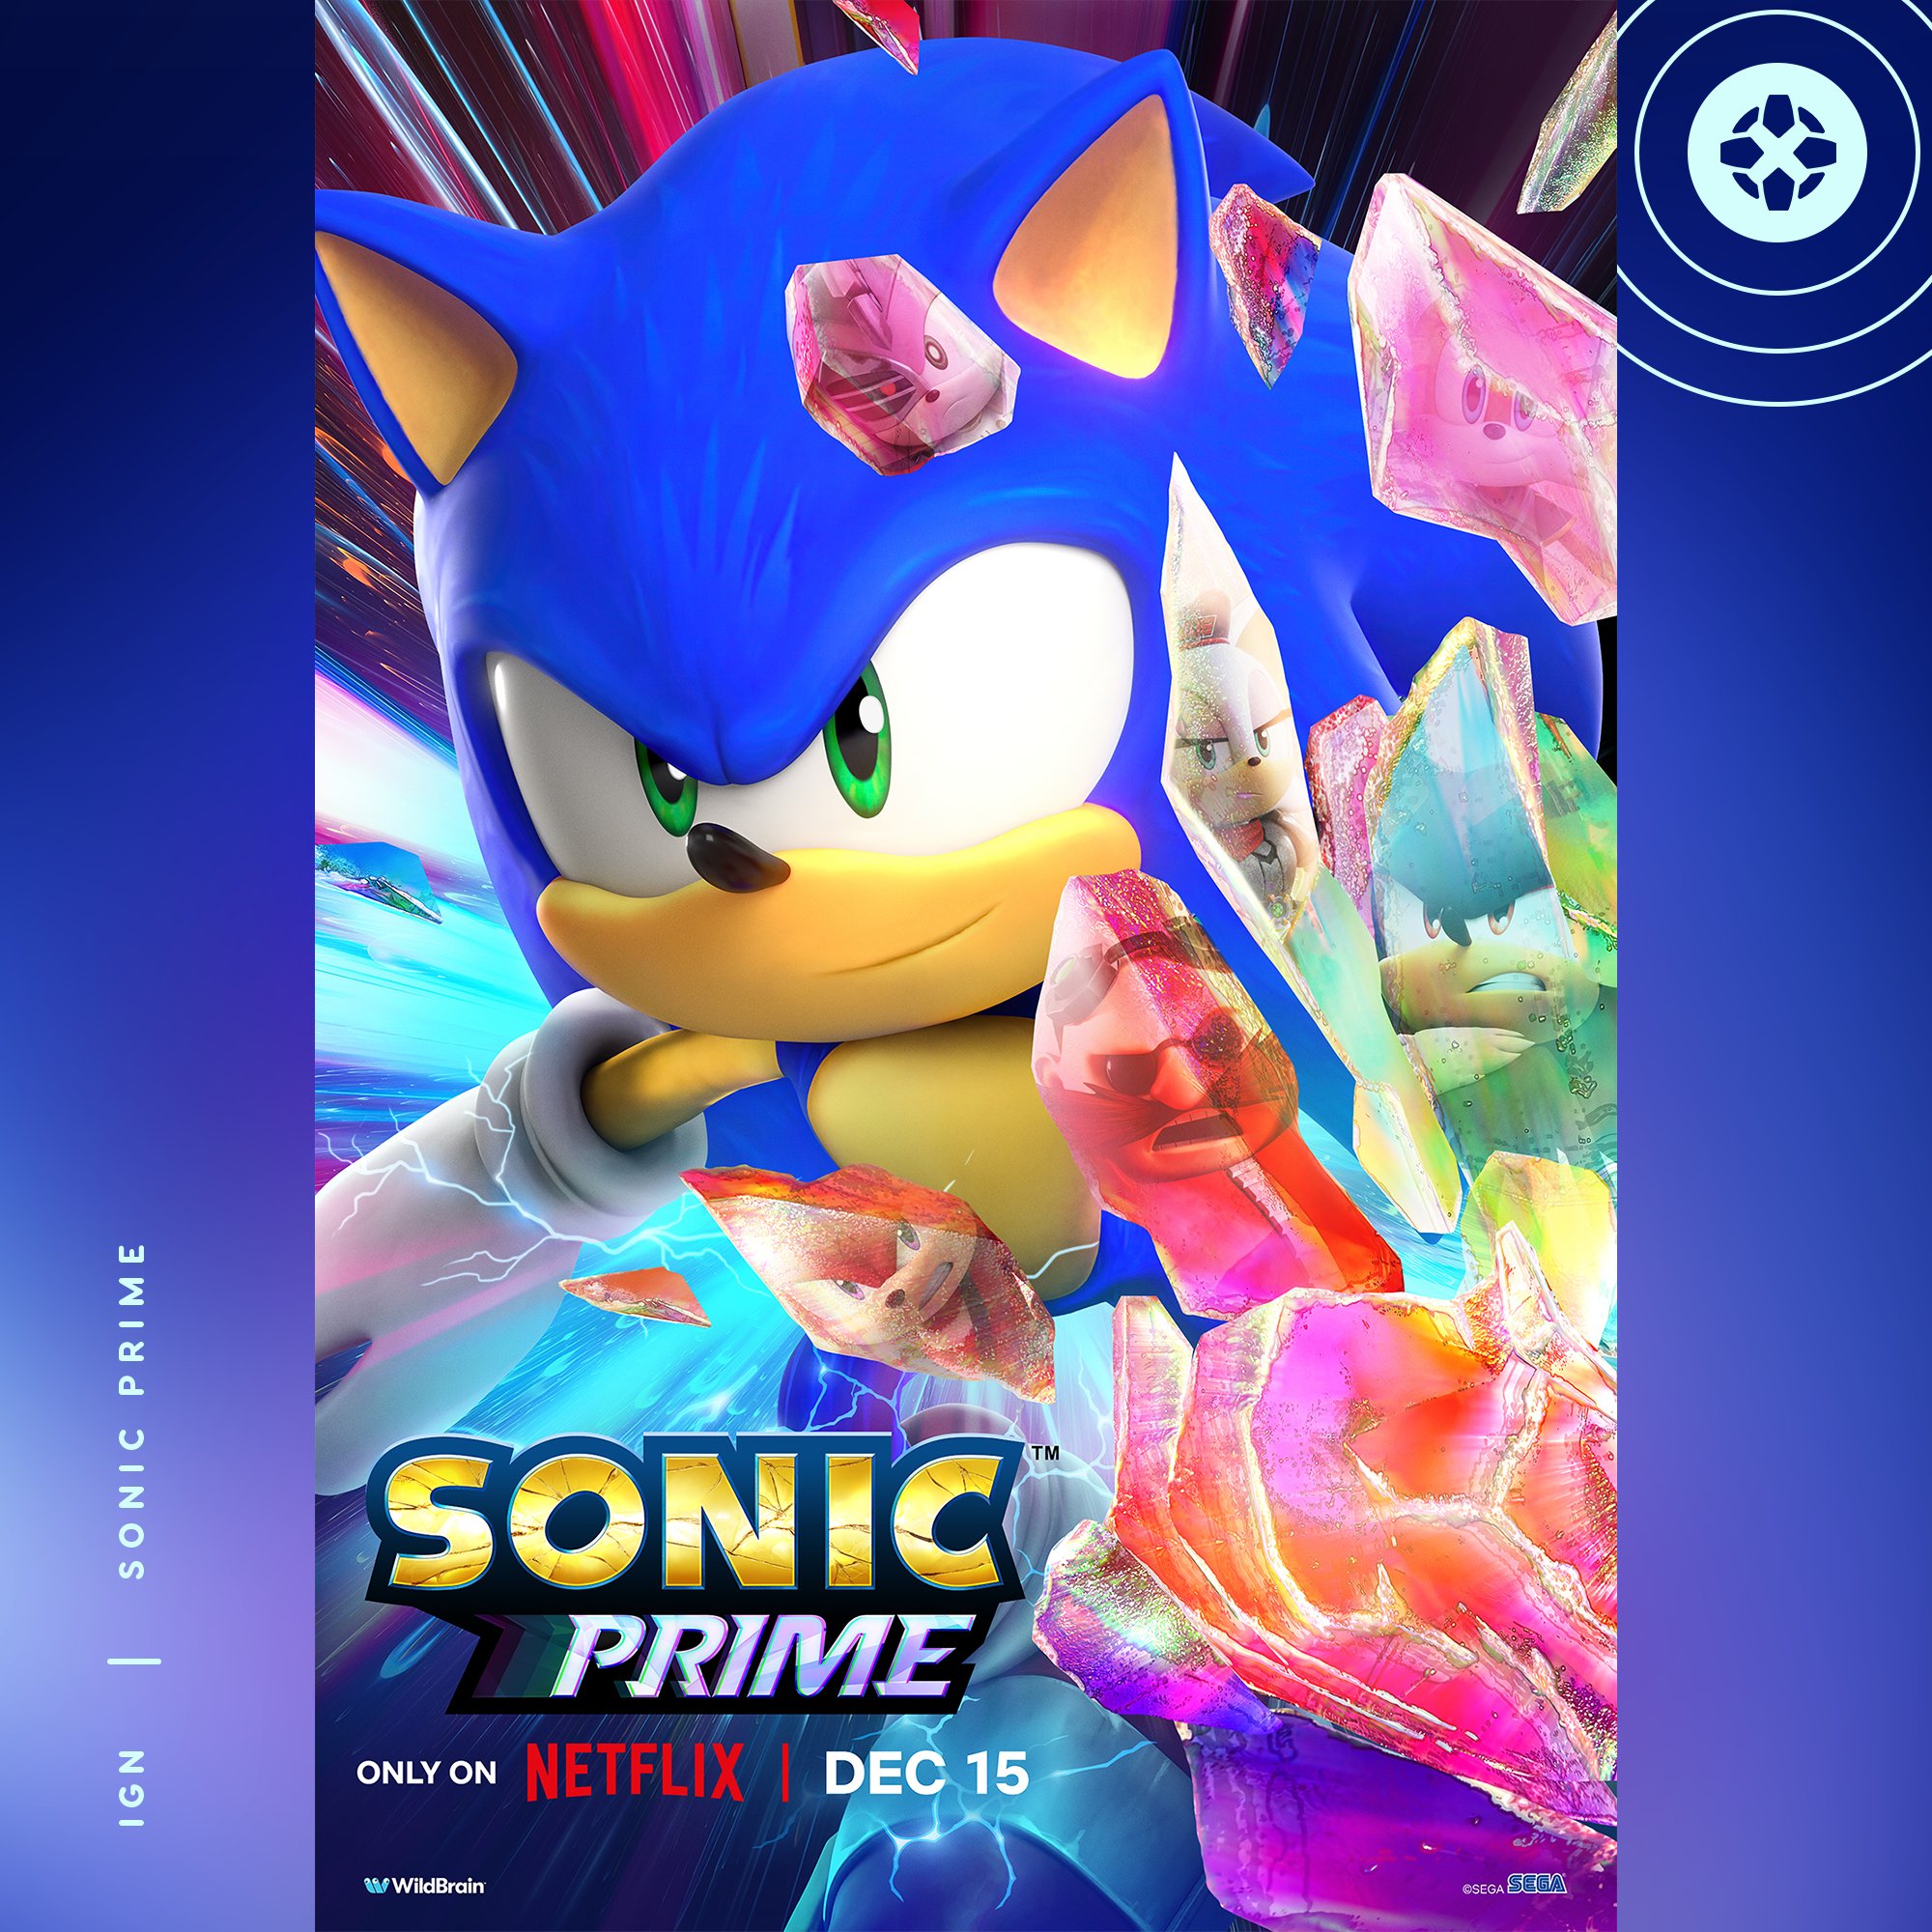 Explore the Best Sonicprimenetflix Art